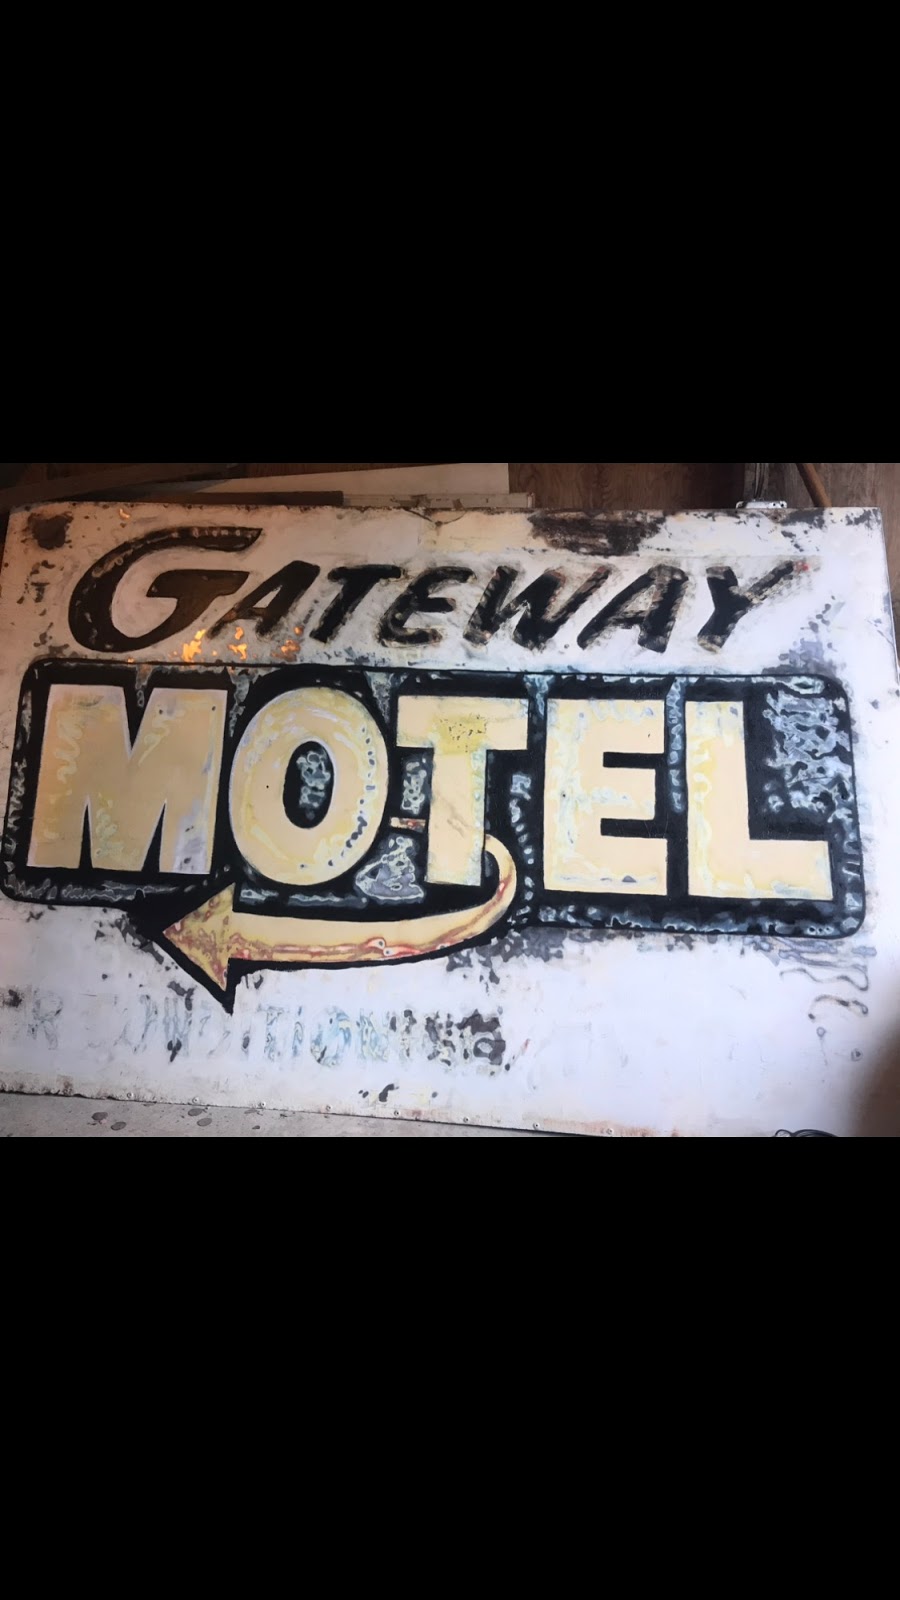 Gateway Motel | 213 Emerson Rd, Wind Gap, PA 18091 | Phone: (610) 881-6045